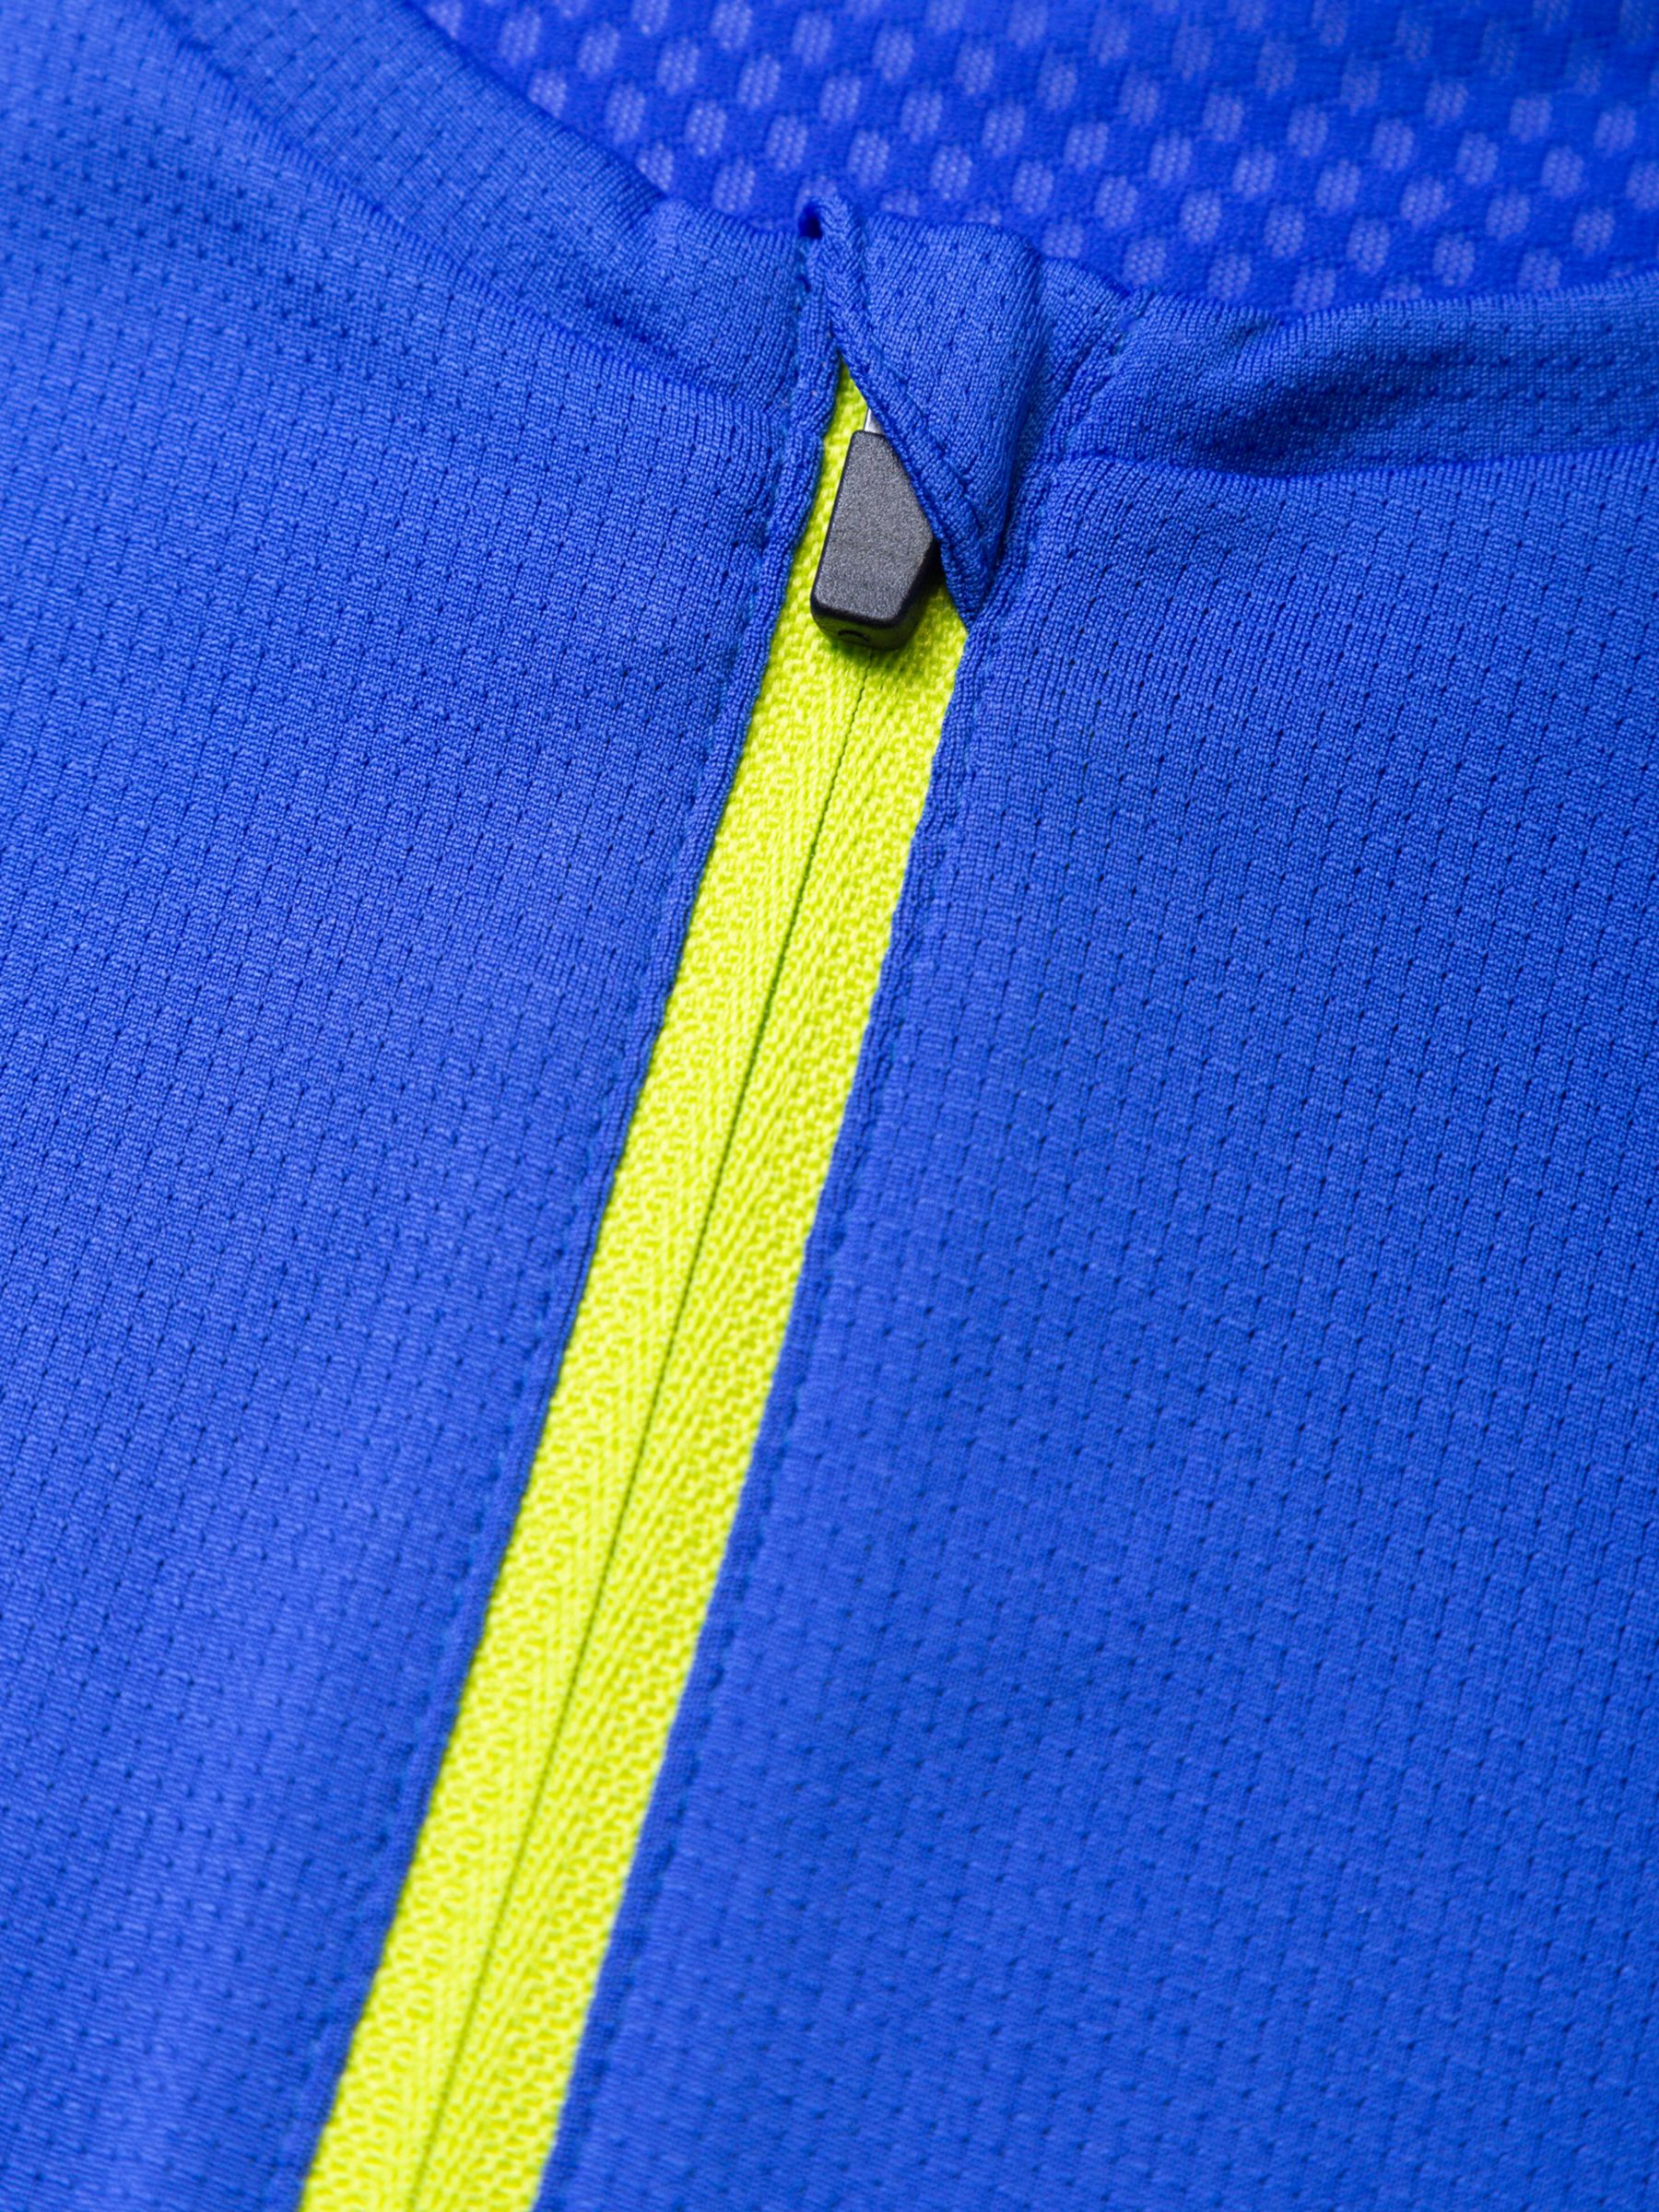 Ronhill 1/2 Zip Neck Sports T-Shirt, Blue, L